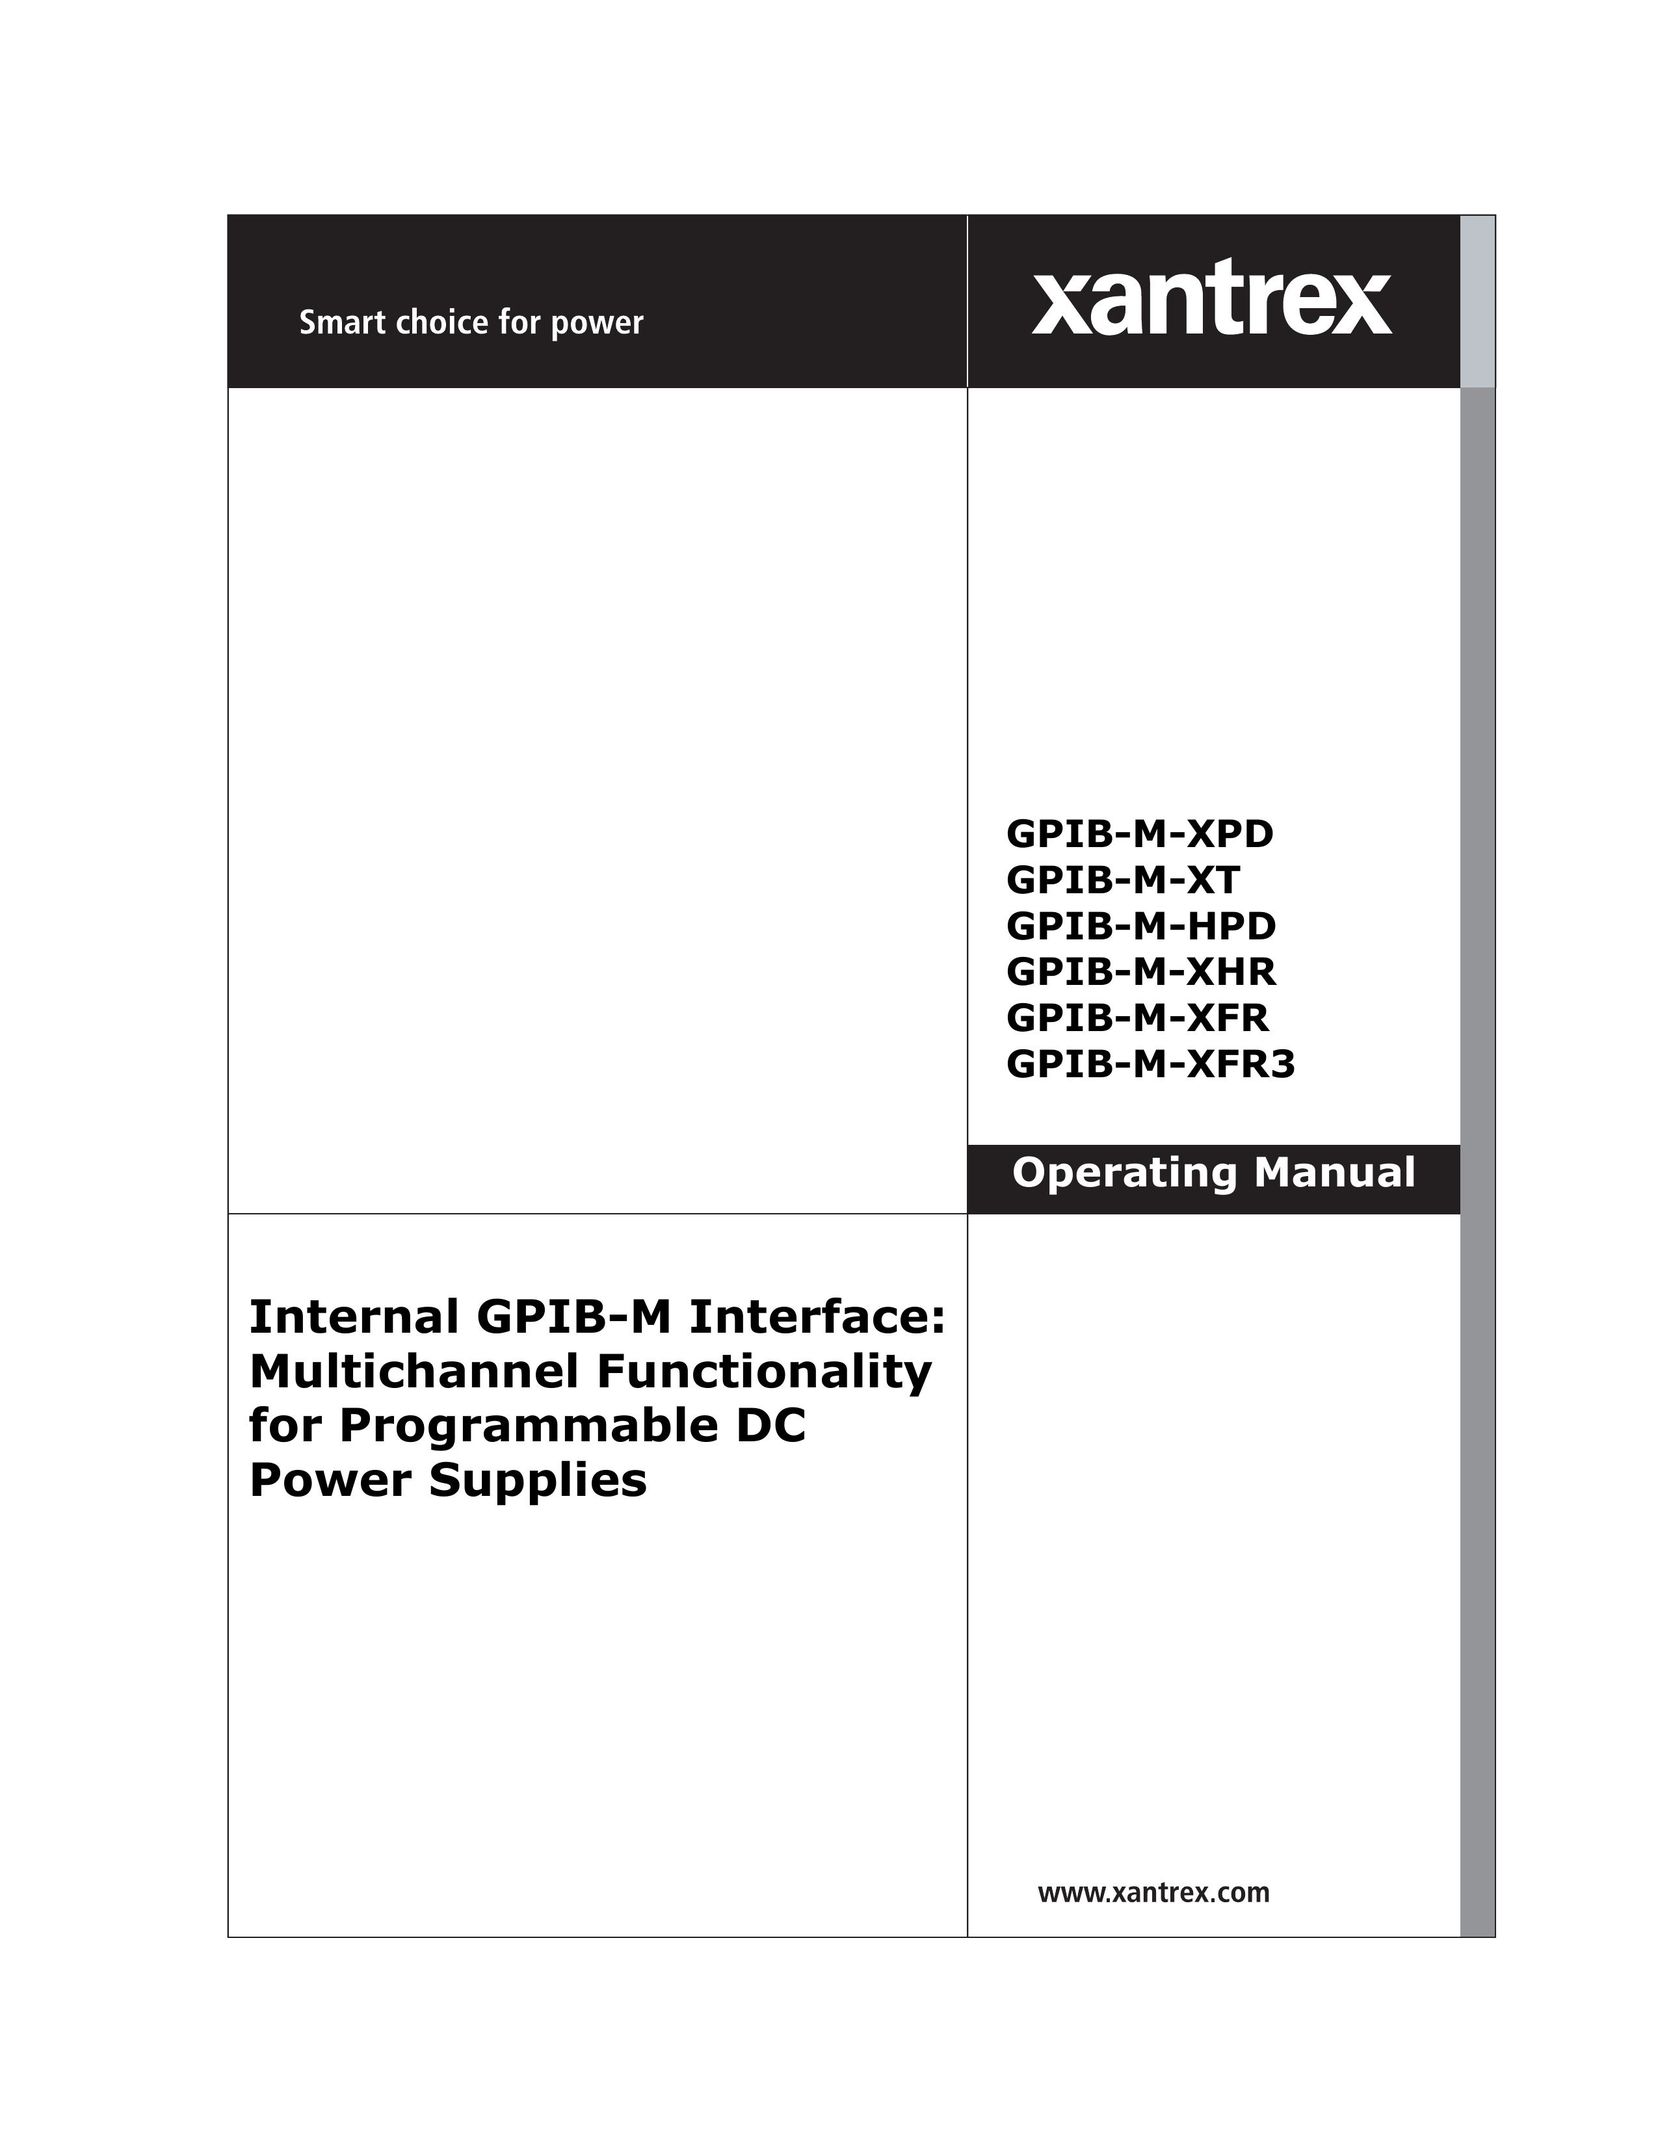 Xantrex Technology GPIB-M-XPD Power Supply User Manual